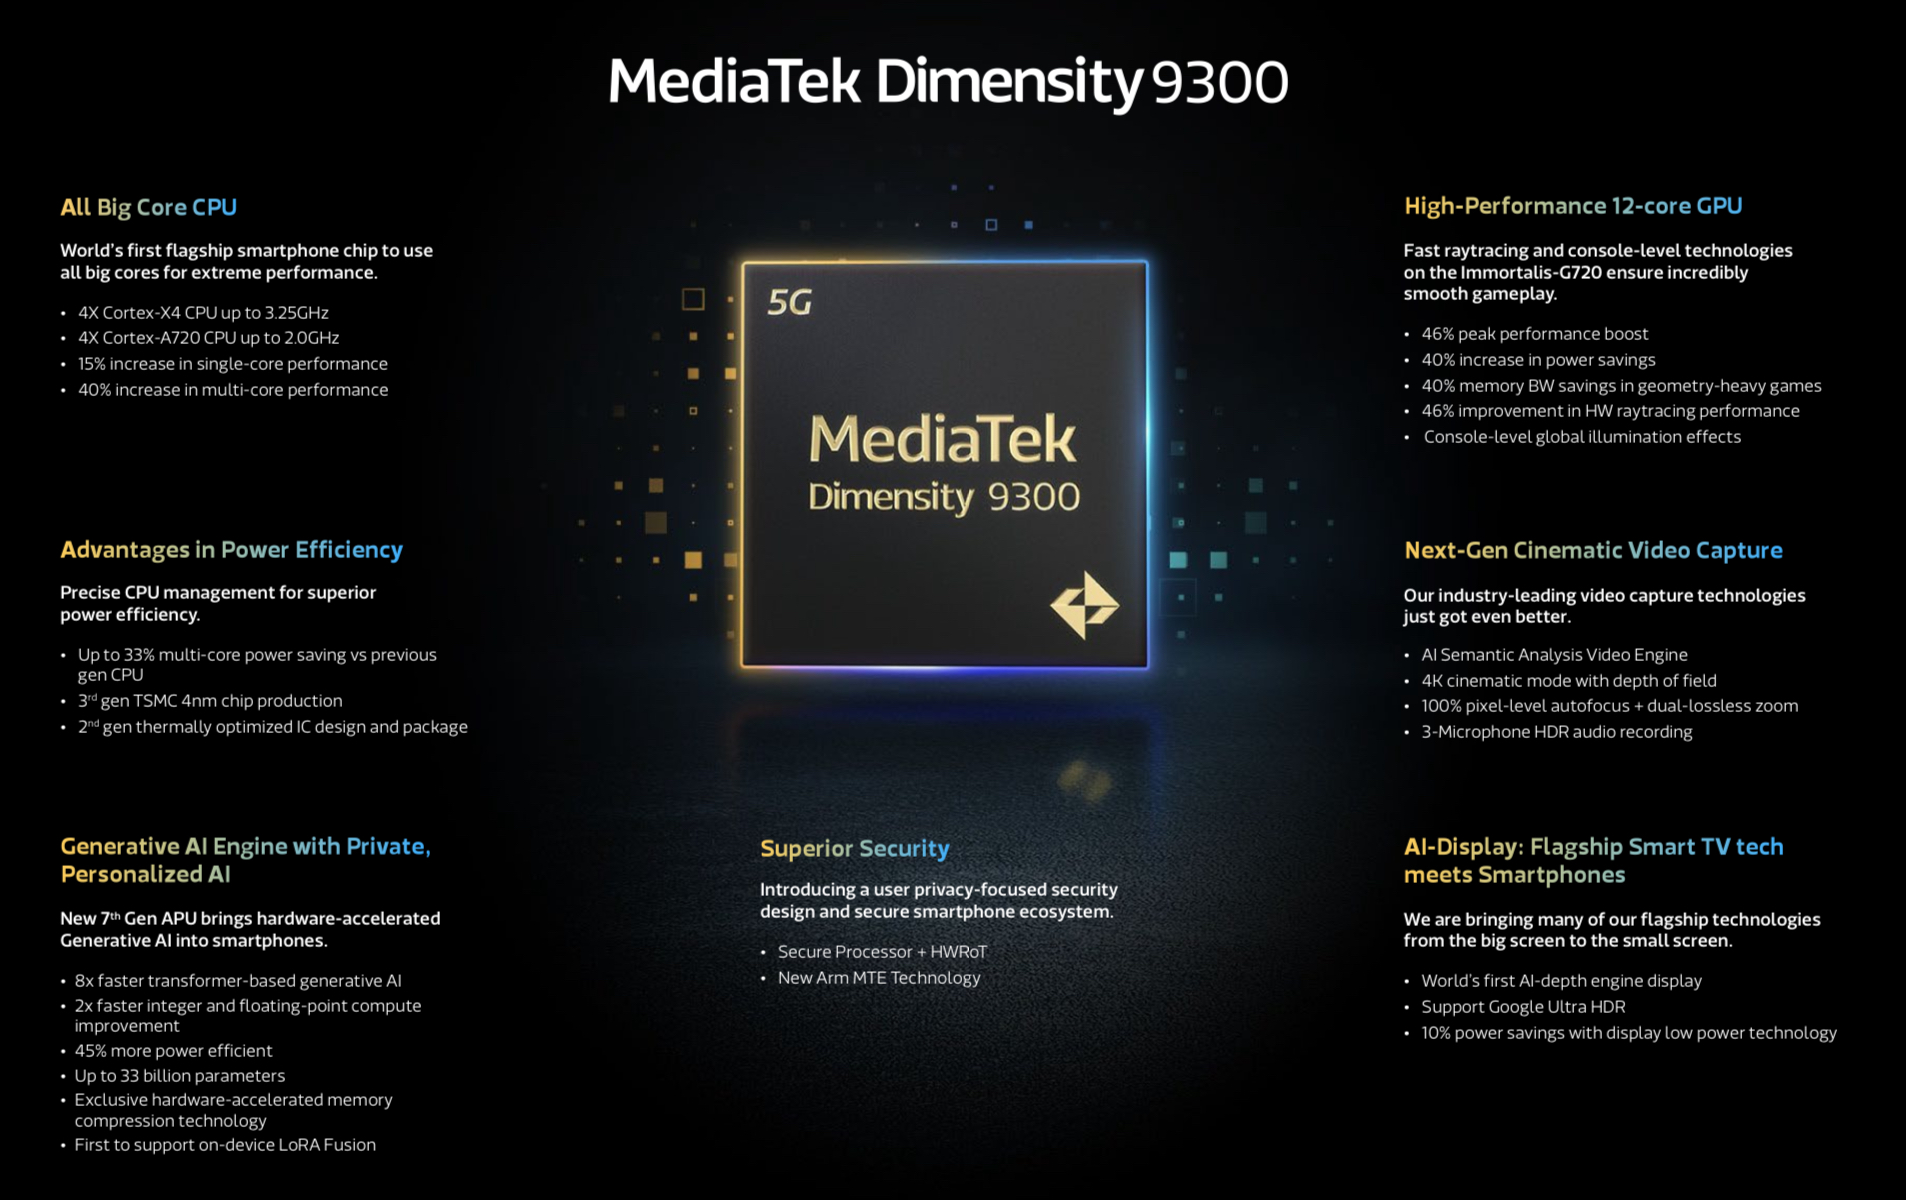 Specifications of the MediaTek Dimensity 9300 processor.